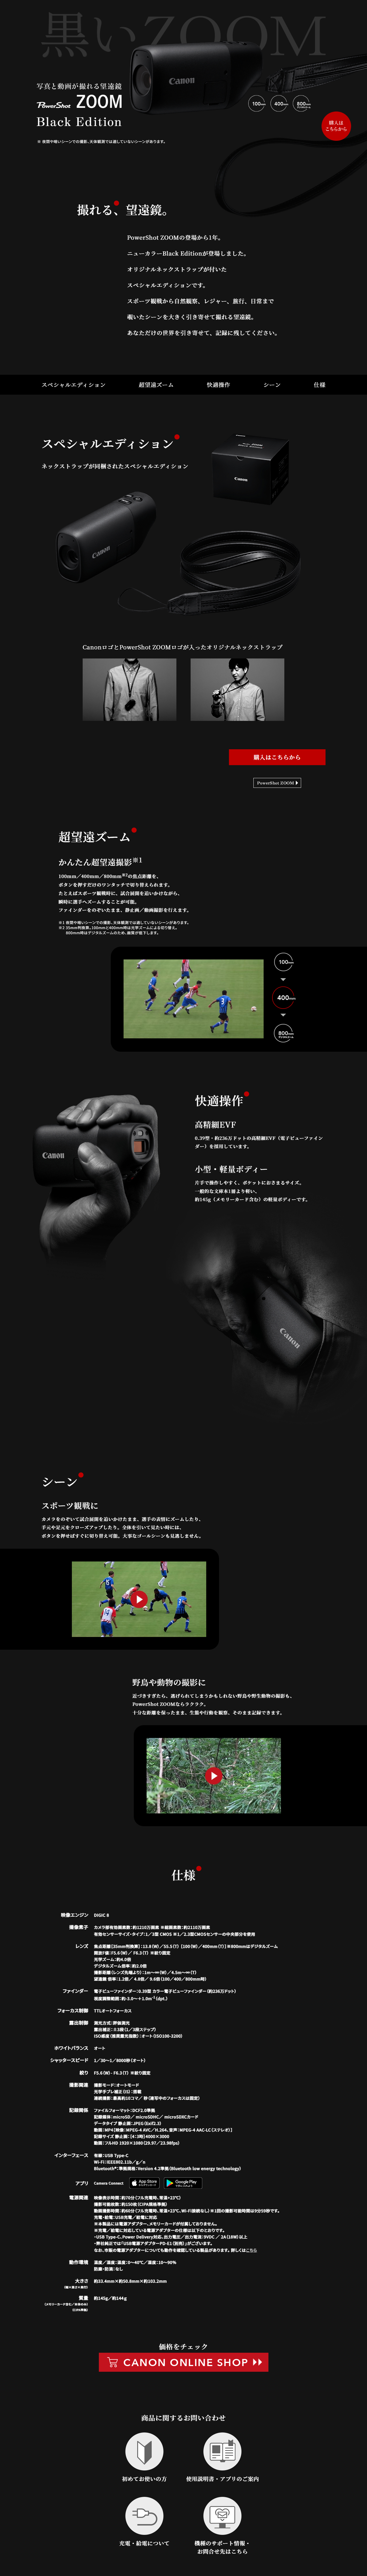 PowerShot ZOOM Black Edition スペシャルサイト_pc_1